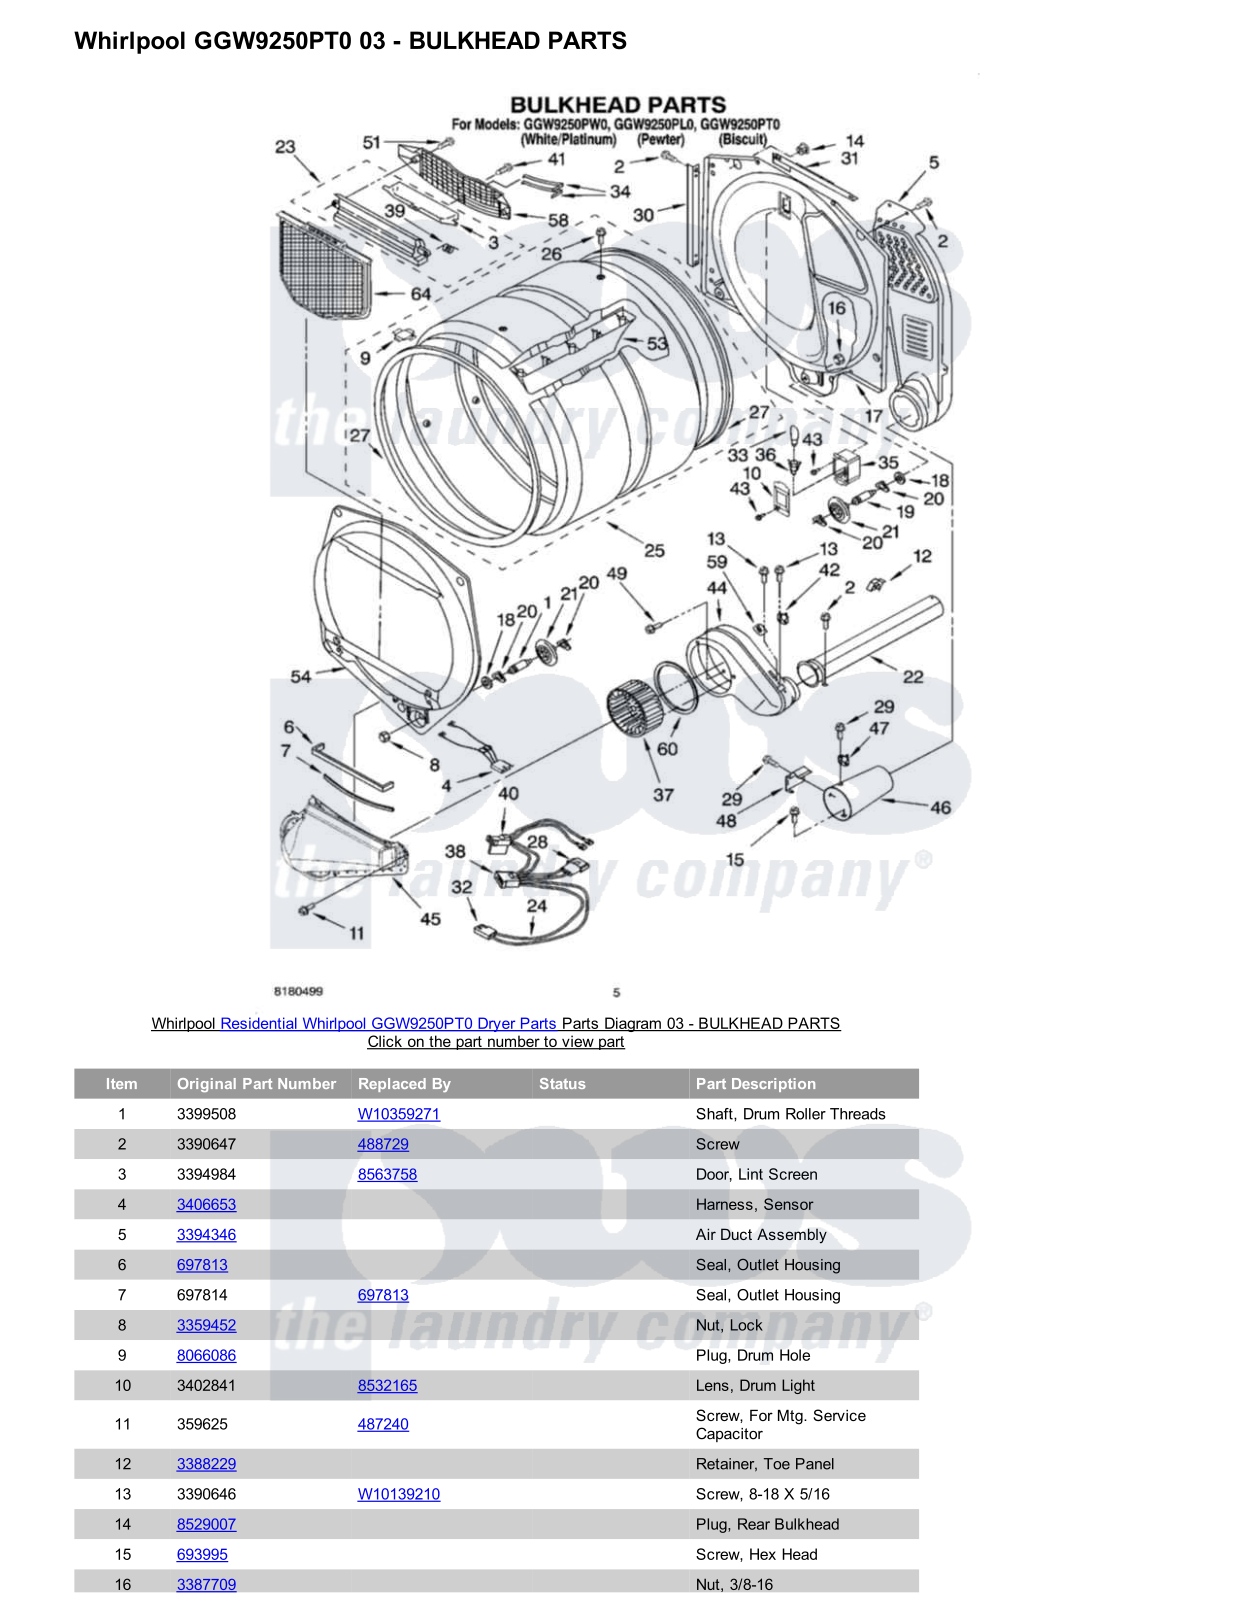 Whirlpool GGW9250PT0 Parts Diagram